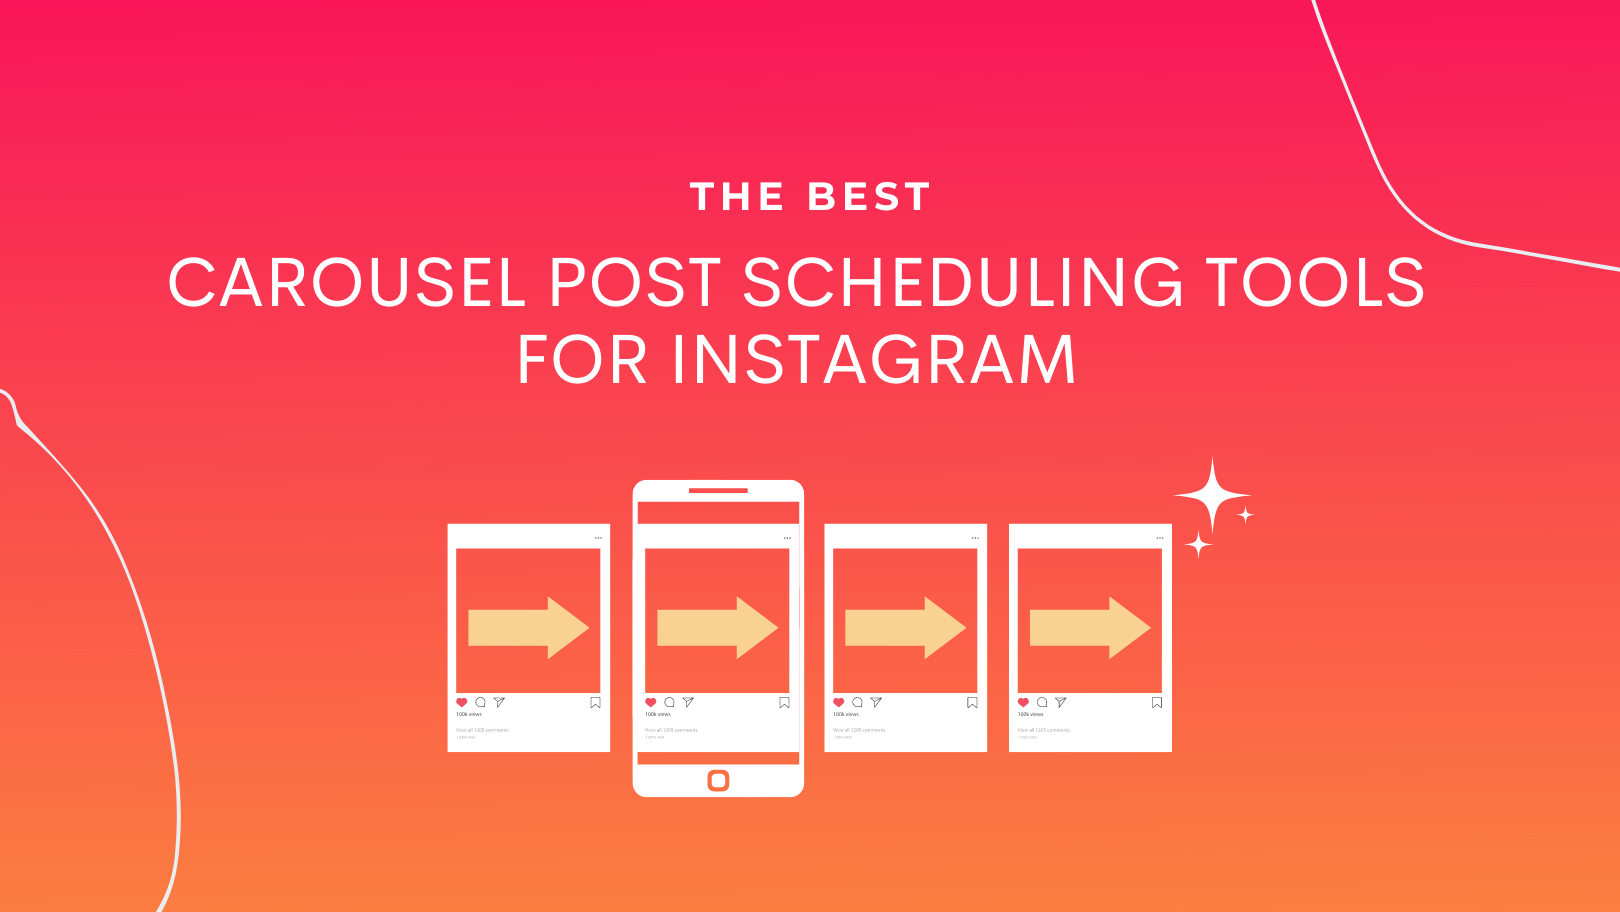 AV-the-best-carousel-post-scheduling-tools-for-instagram